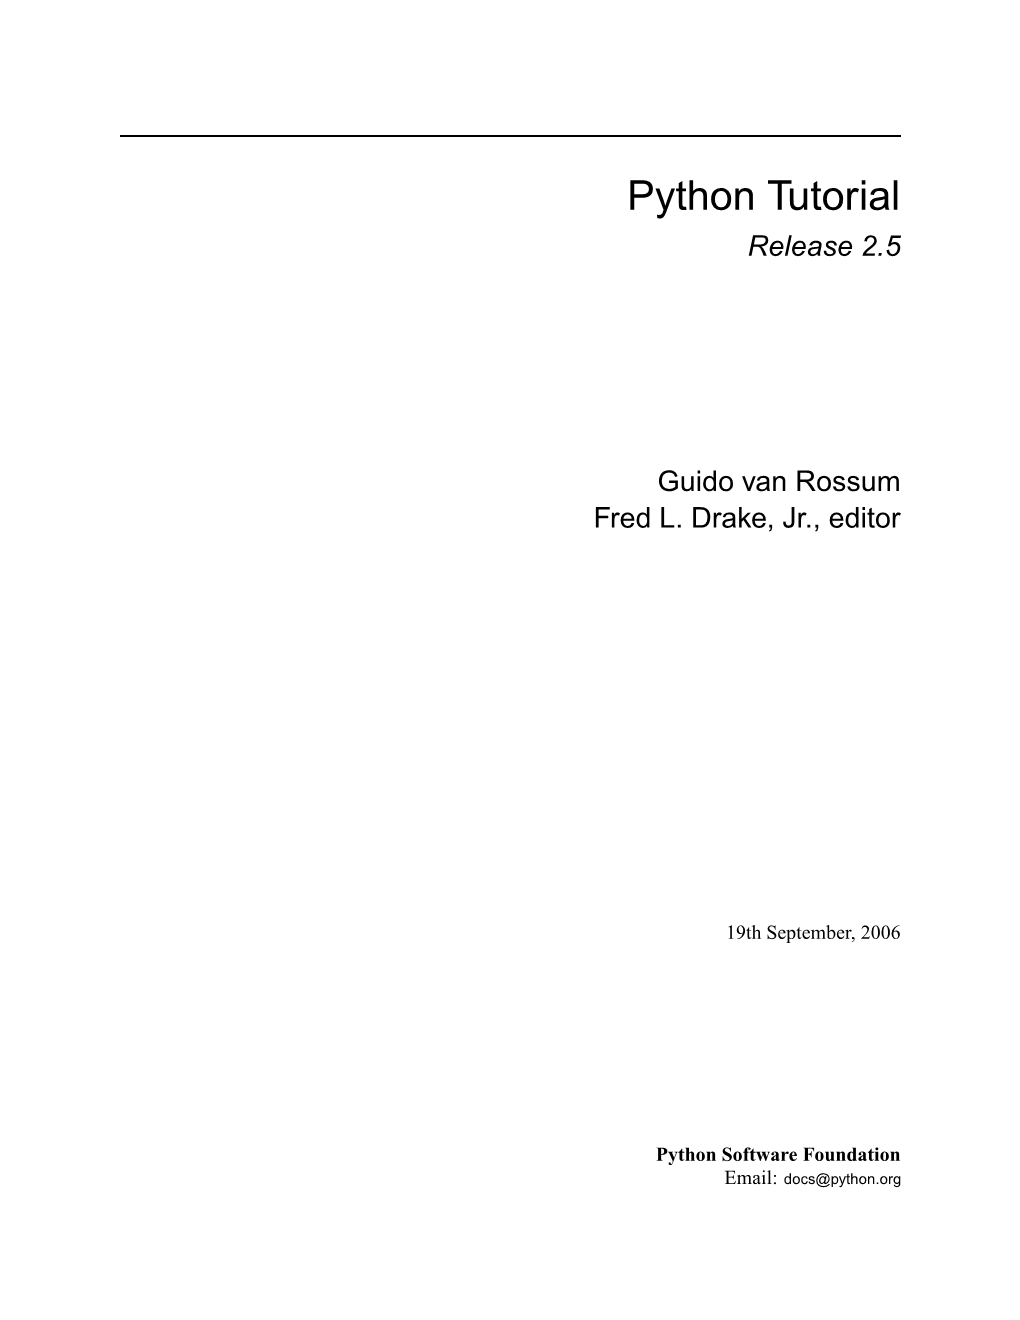 Python Tutorial Release 2.5